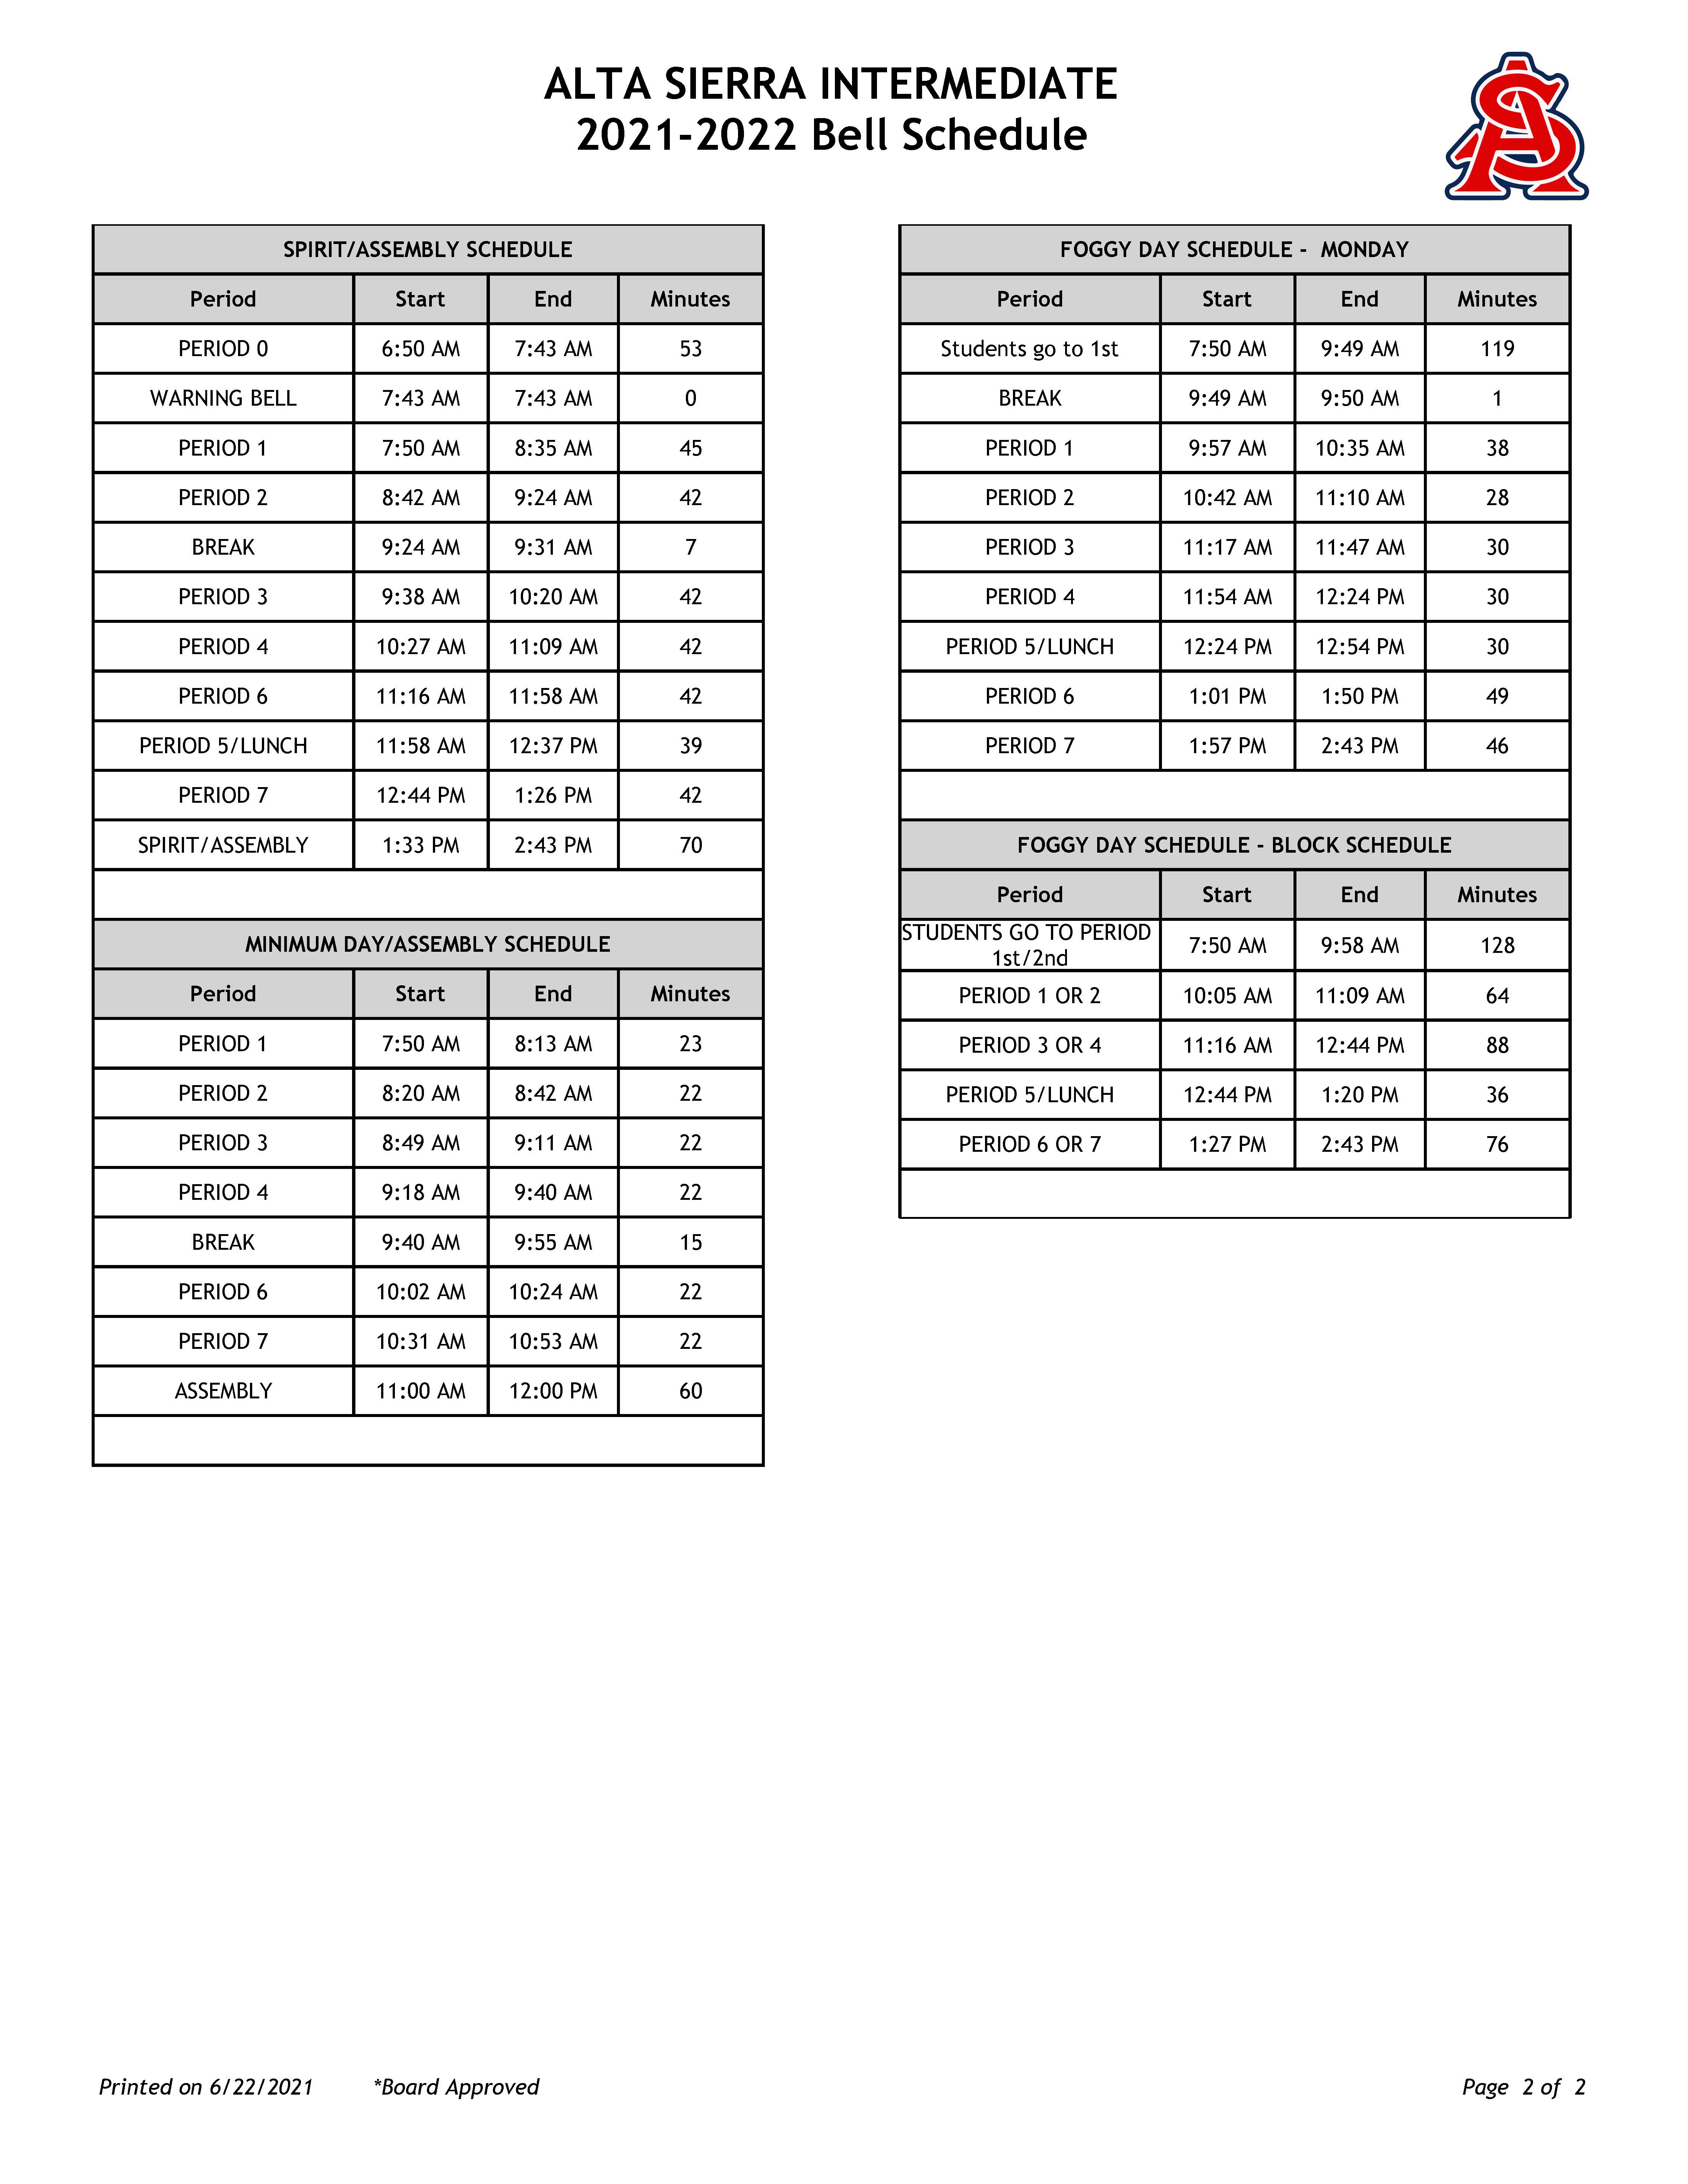 ASI Bell Schedule P2